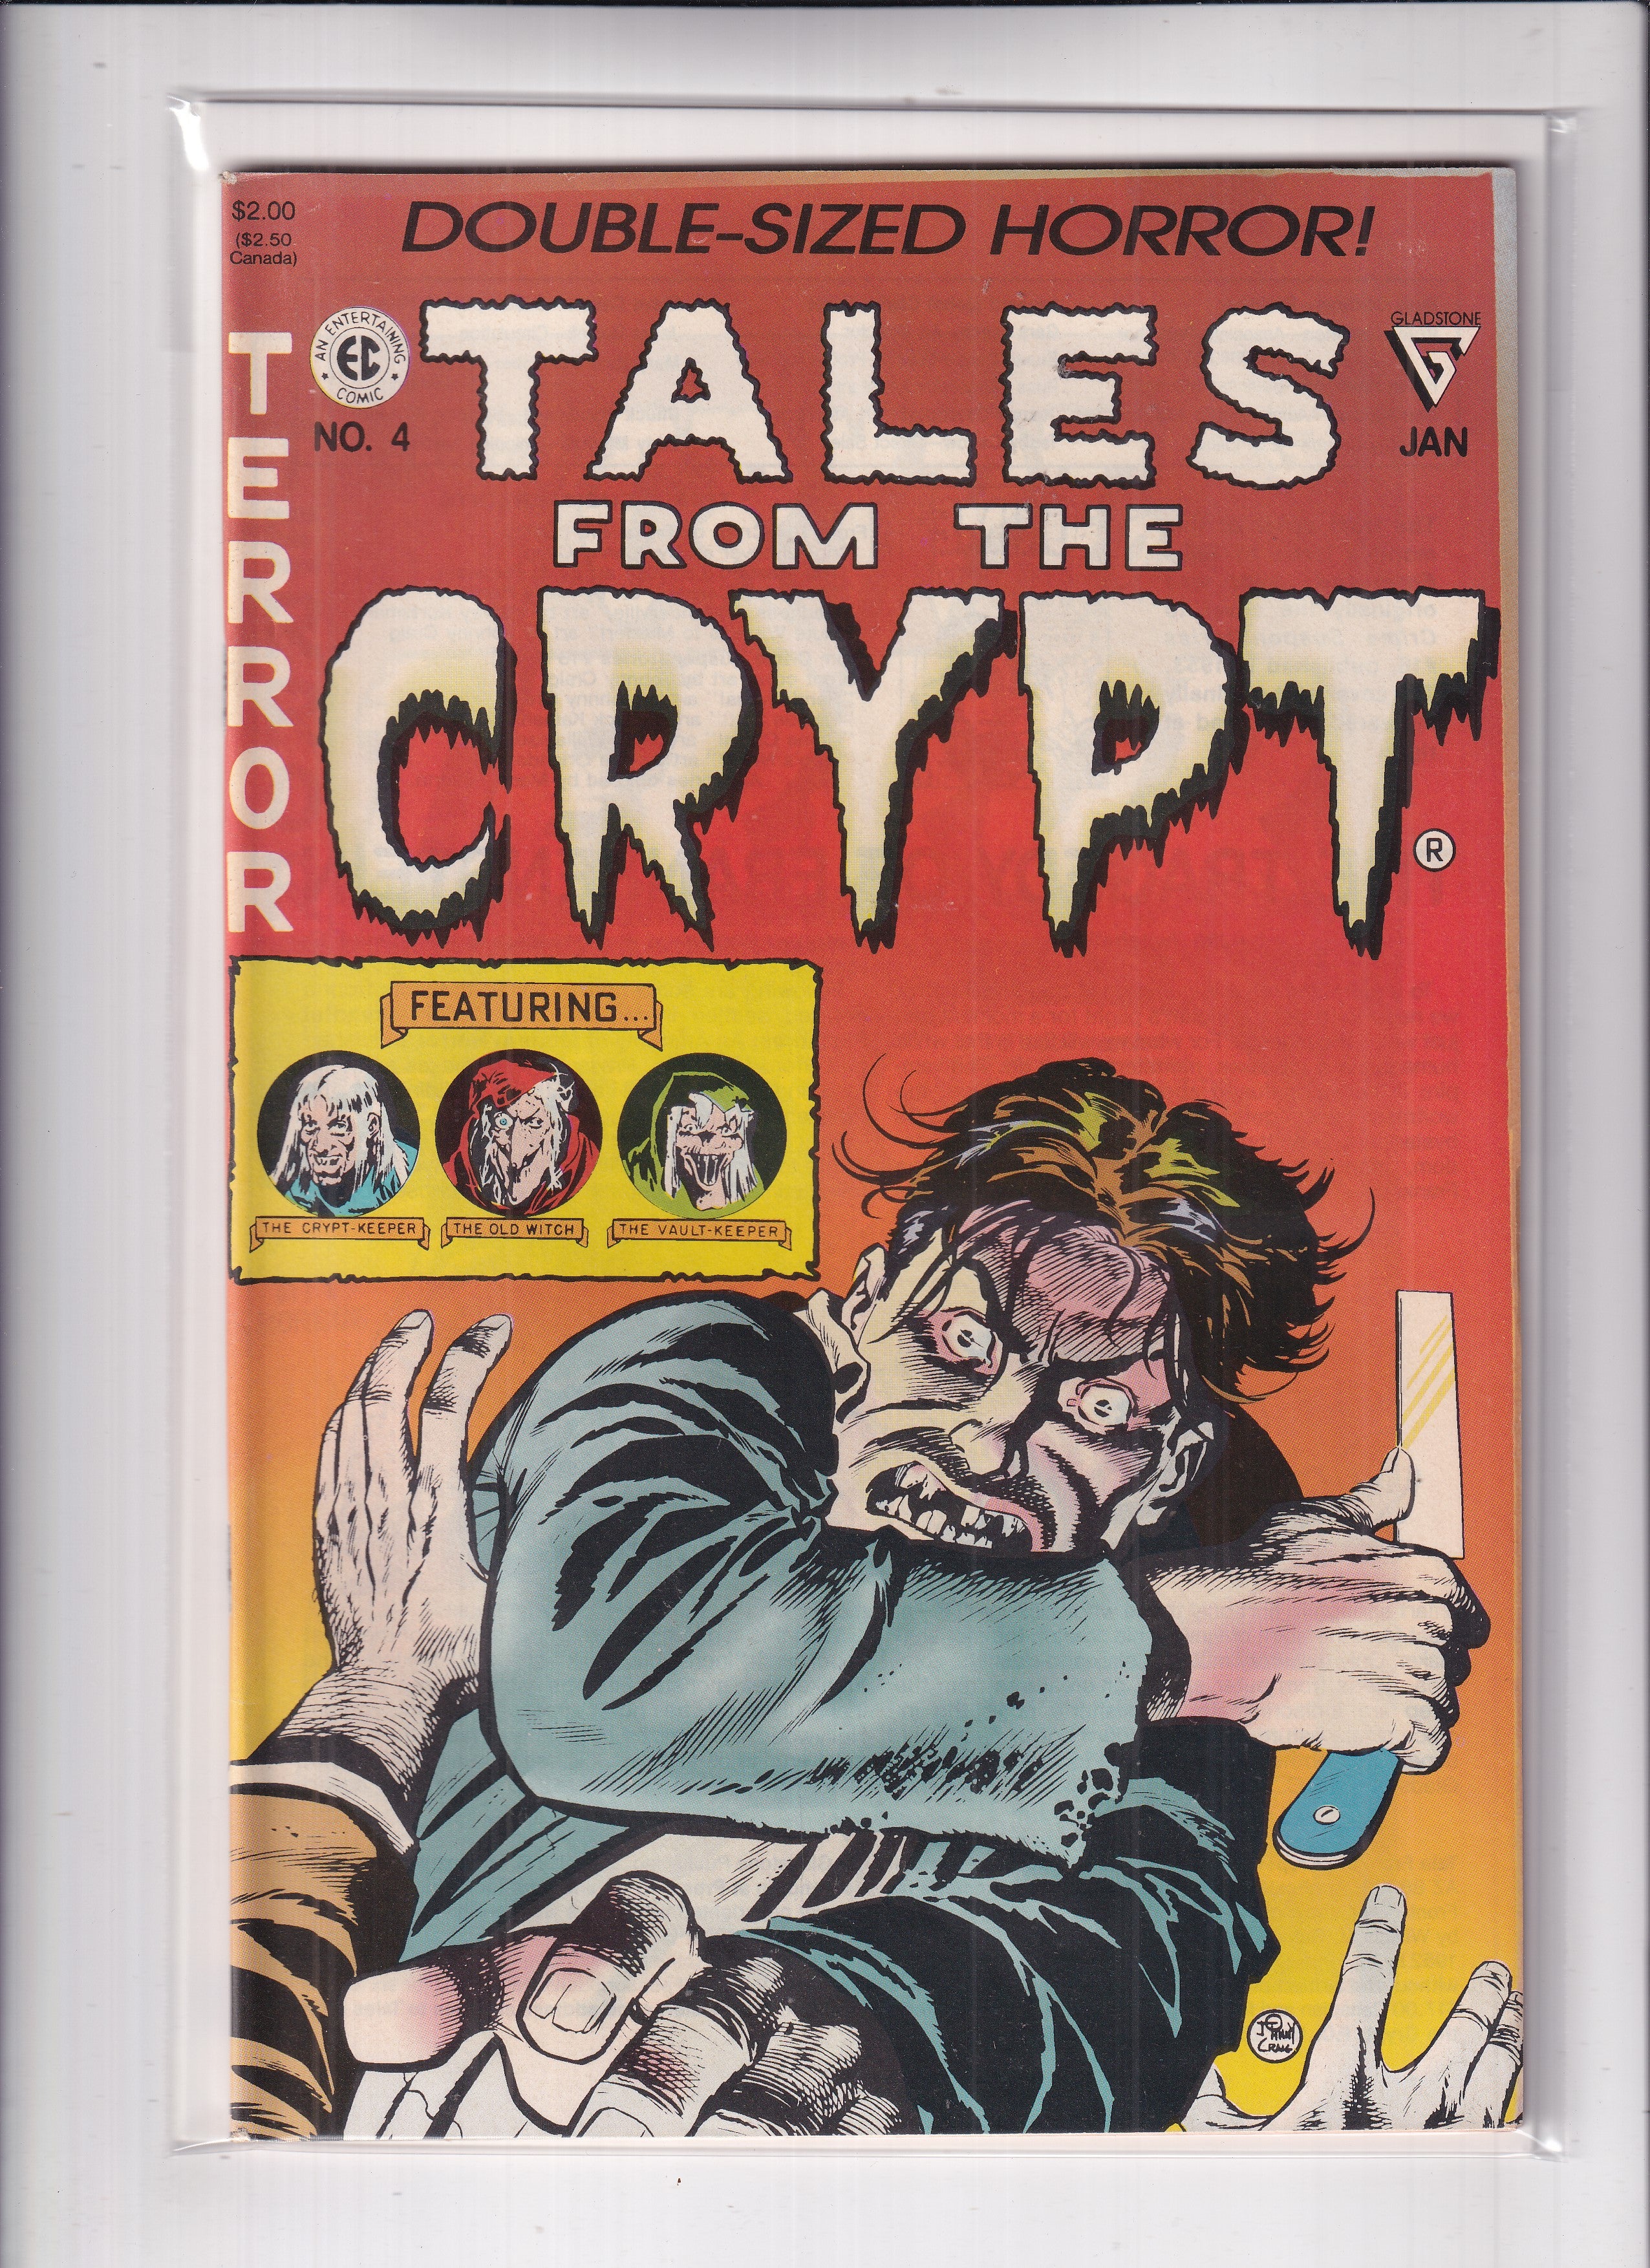 TALES FROM THE CRYPT #4 EC REPRINT - Slab City Comics 